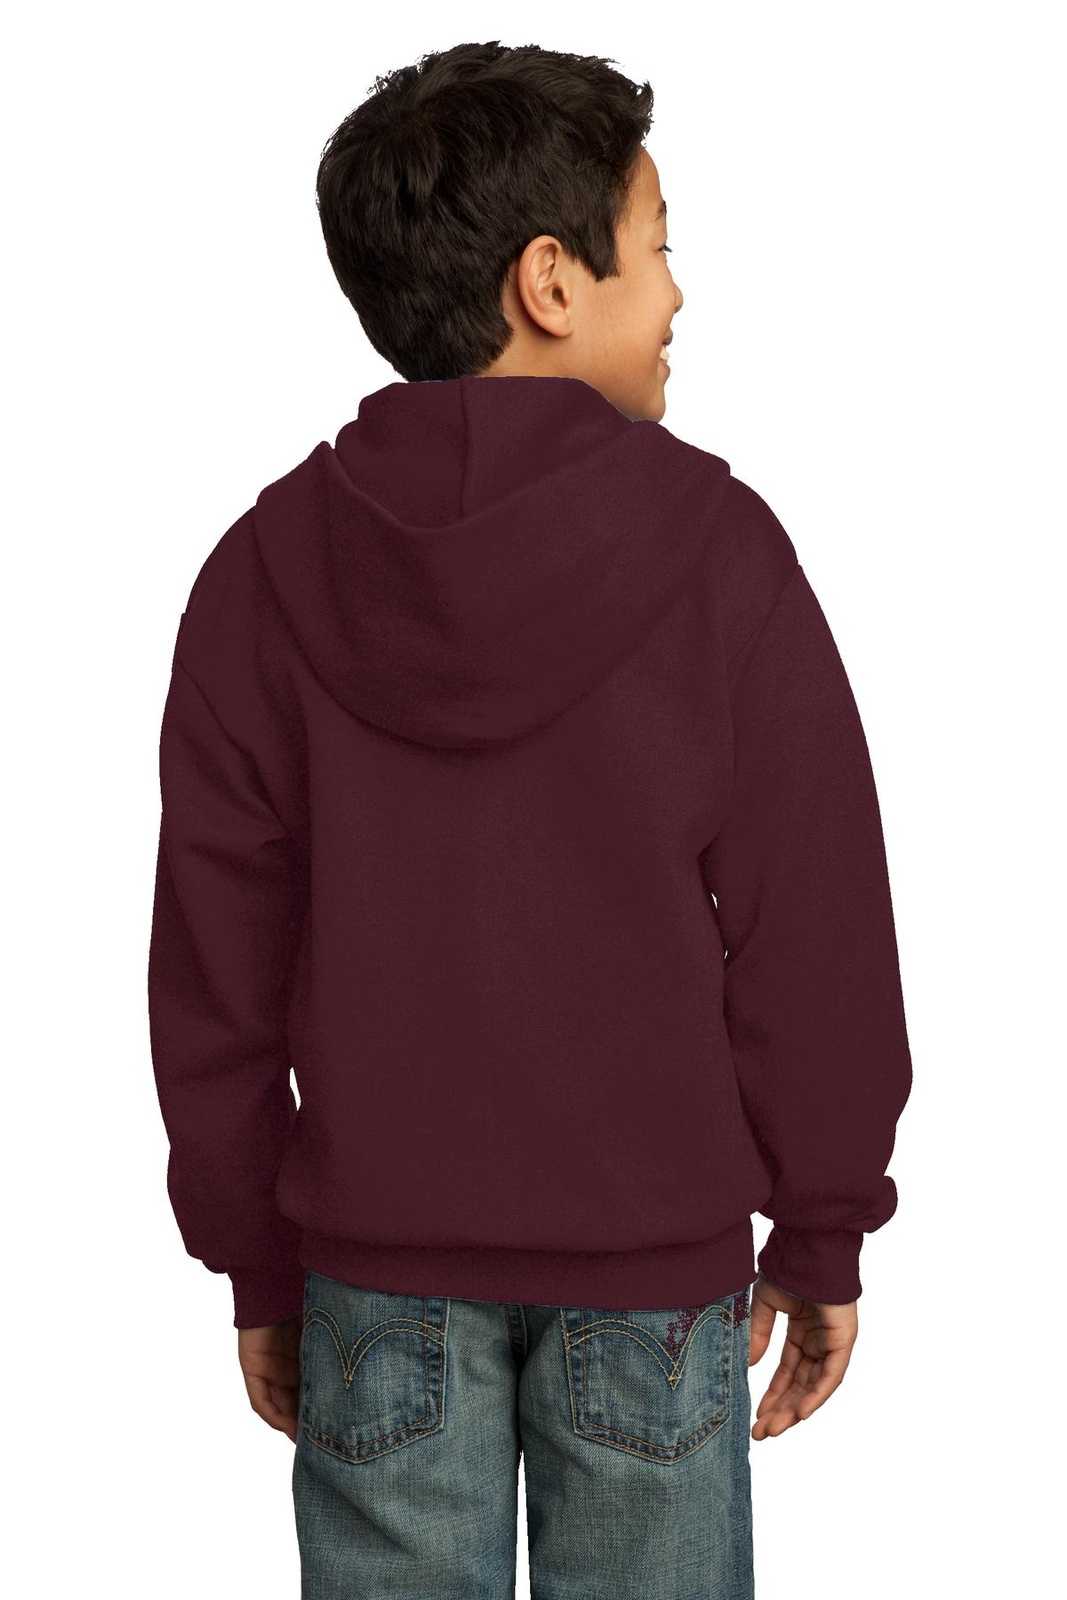 Port & Company PC90YZH Youth Core Fleece Full-Zip Hooded Sweatshirt - Maroon - HIT a Double - 1